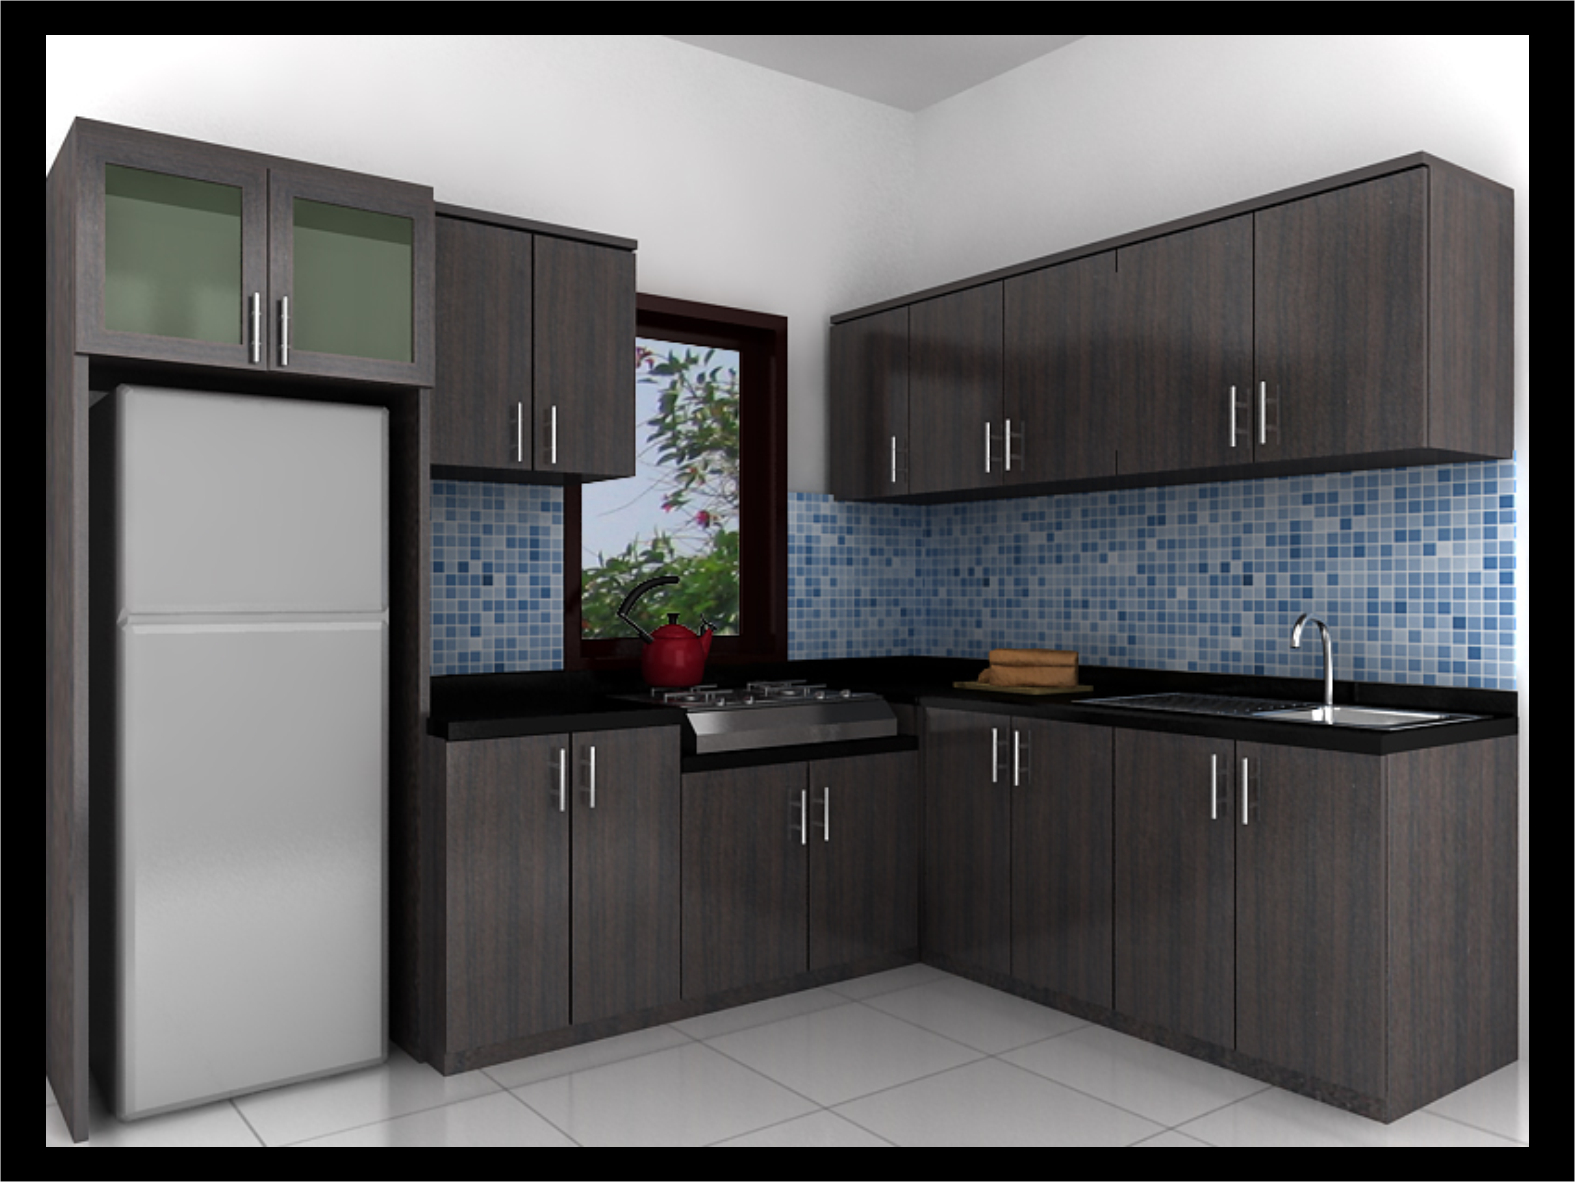 Model Dapur Minimalis Ukuran Kecil 3×3 rumah minimalis indah